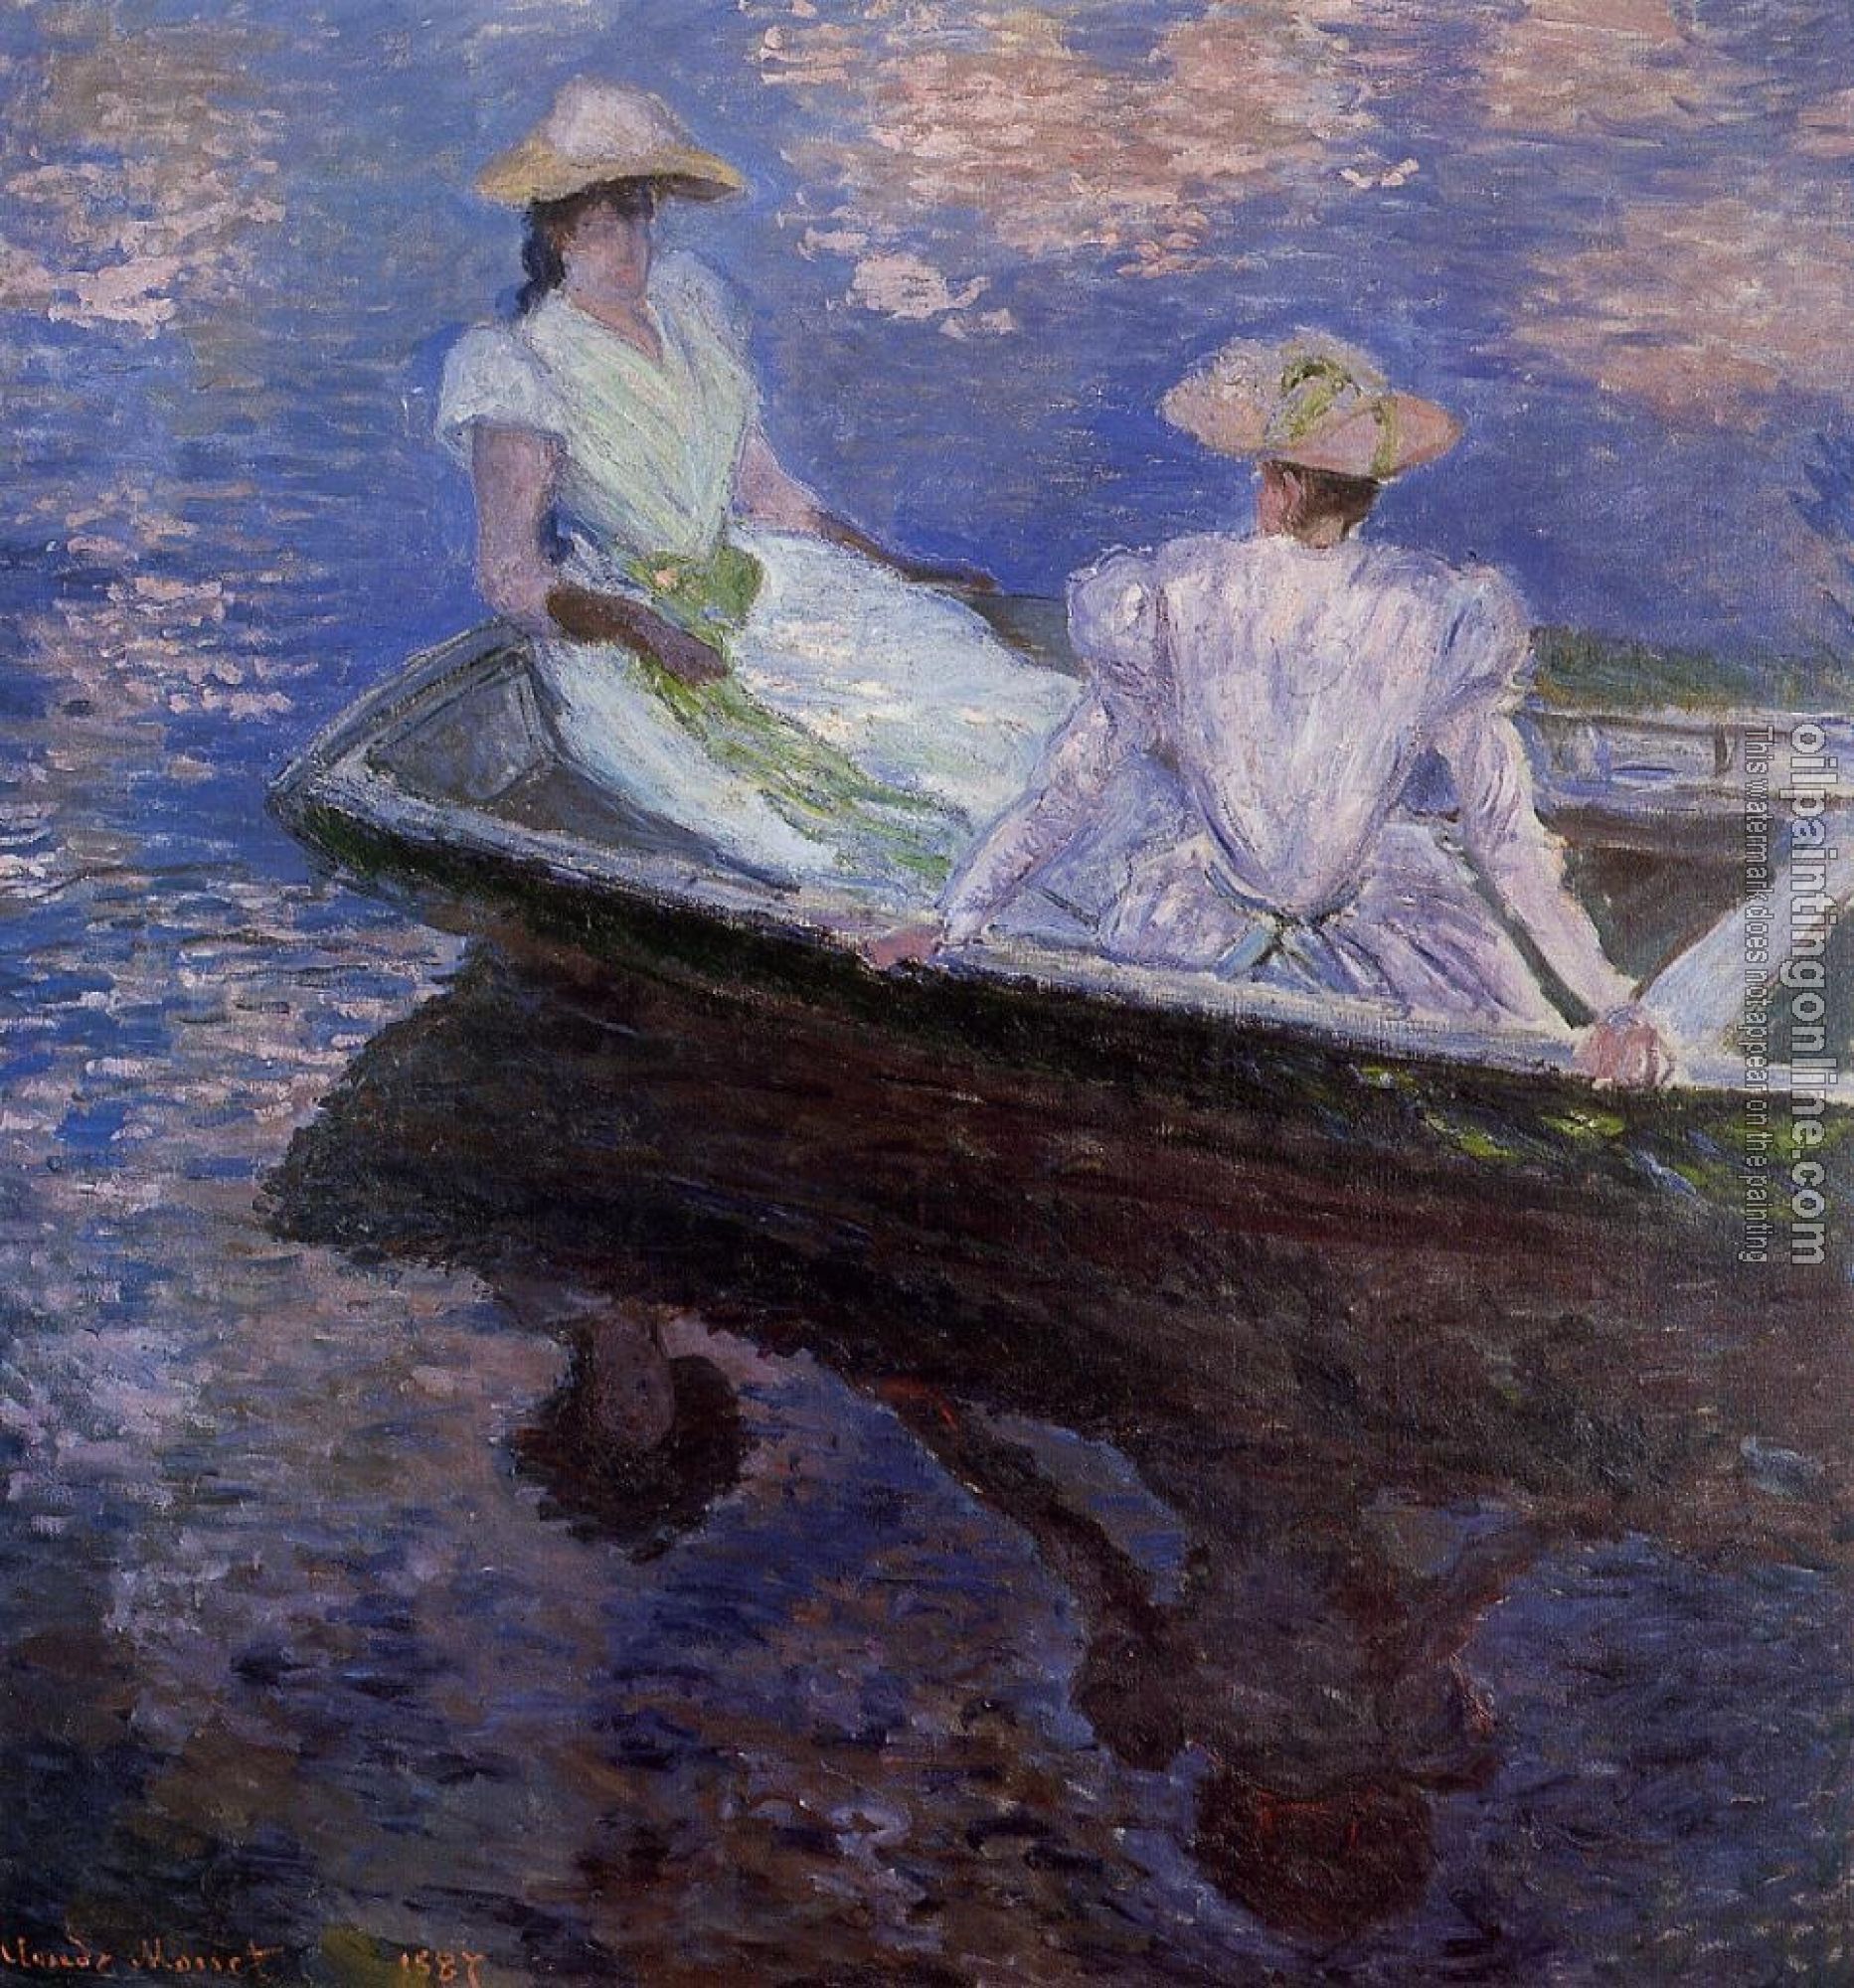 Monet, Claude Oscar - Young Girls in a Row Boat